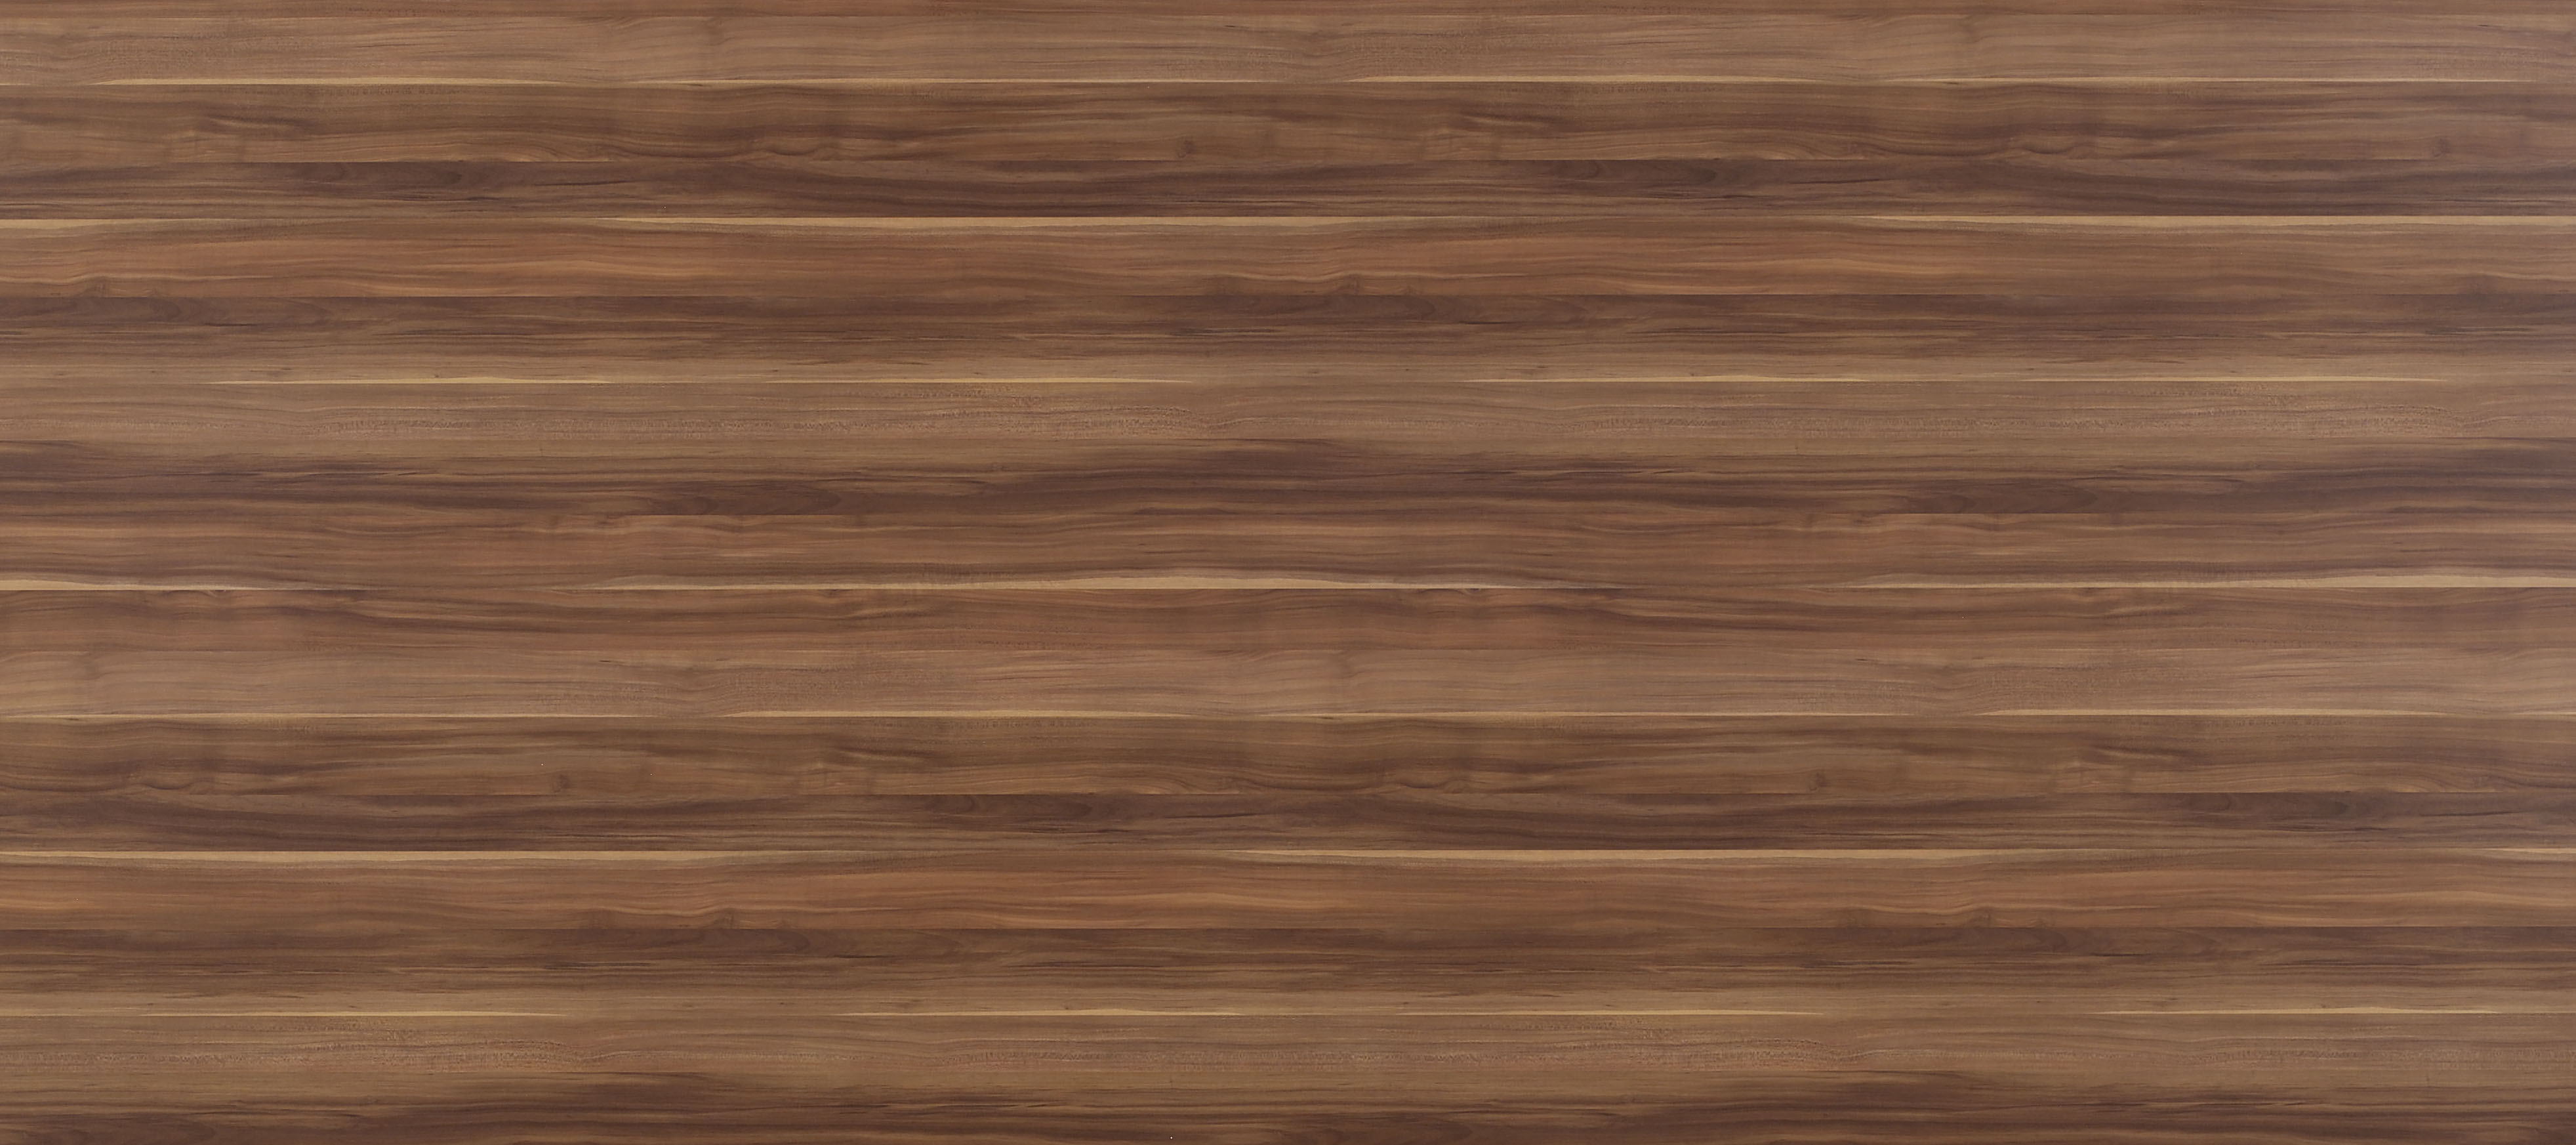 keyshot wood texture